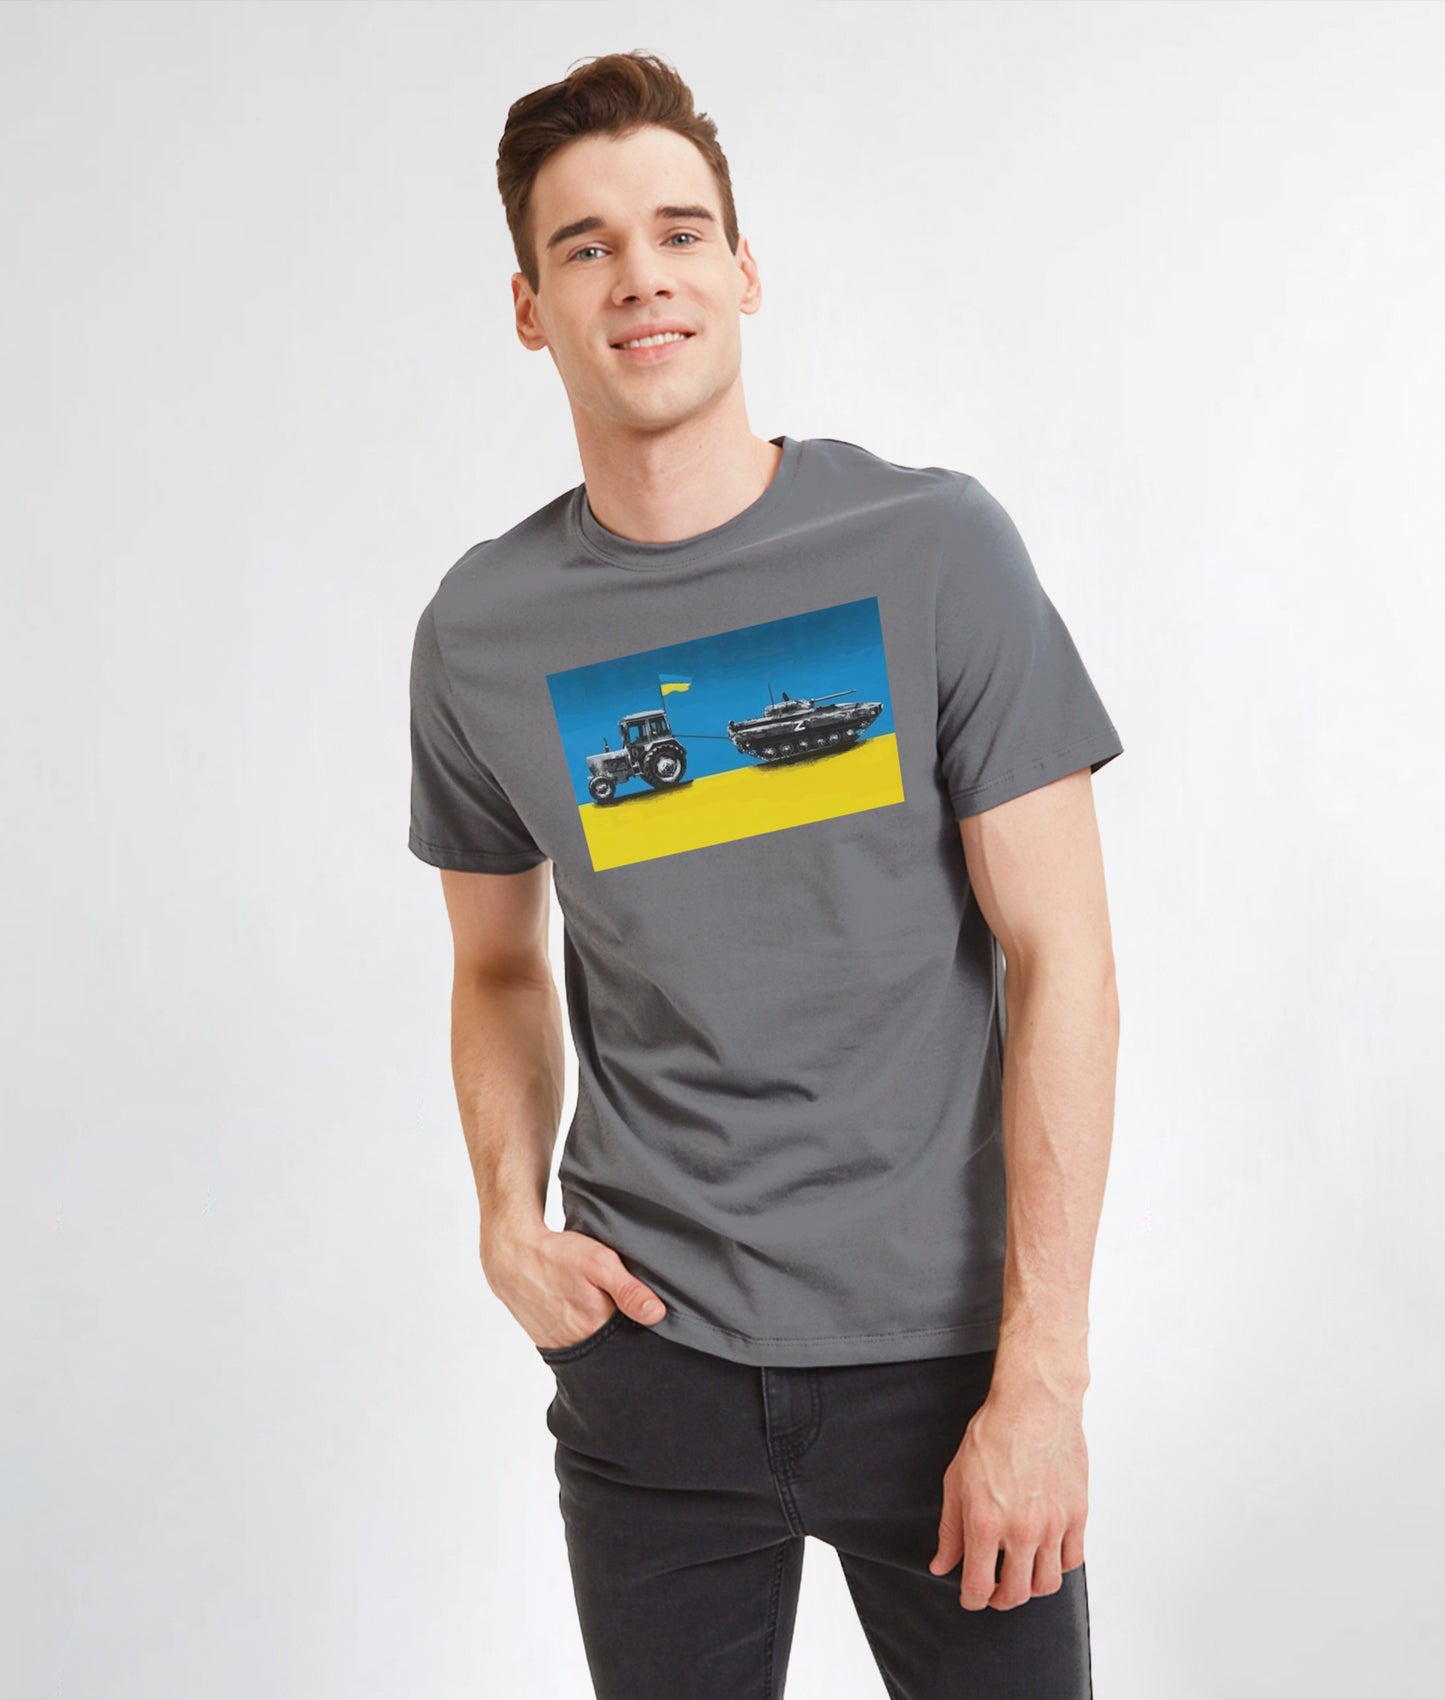 T-shirt Ukrainian Tractor